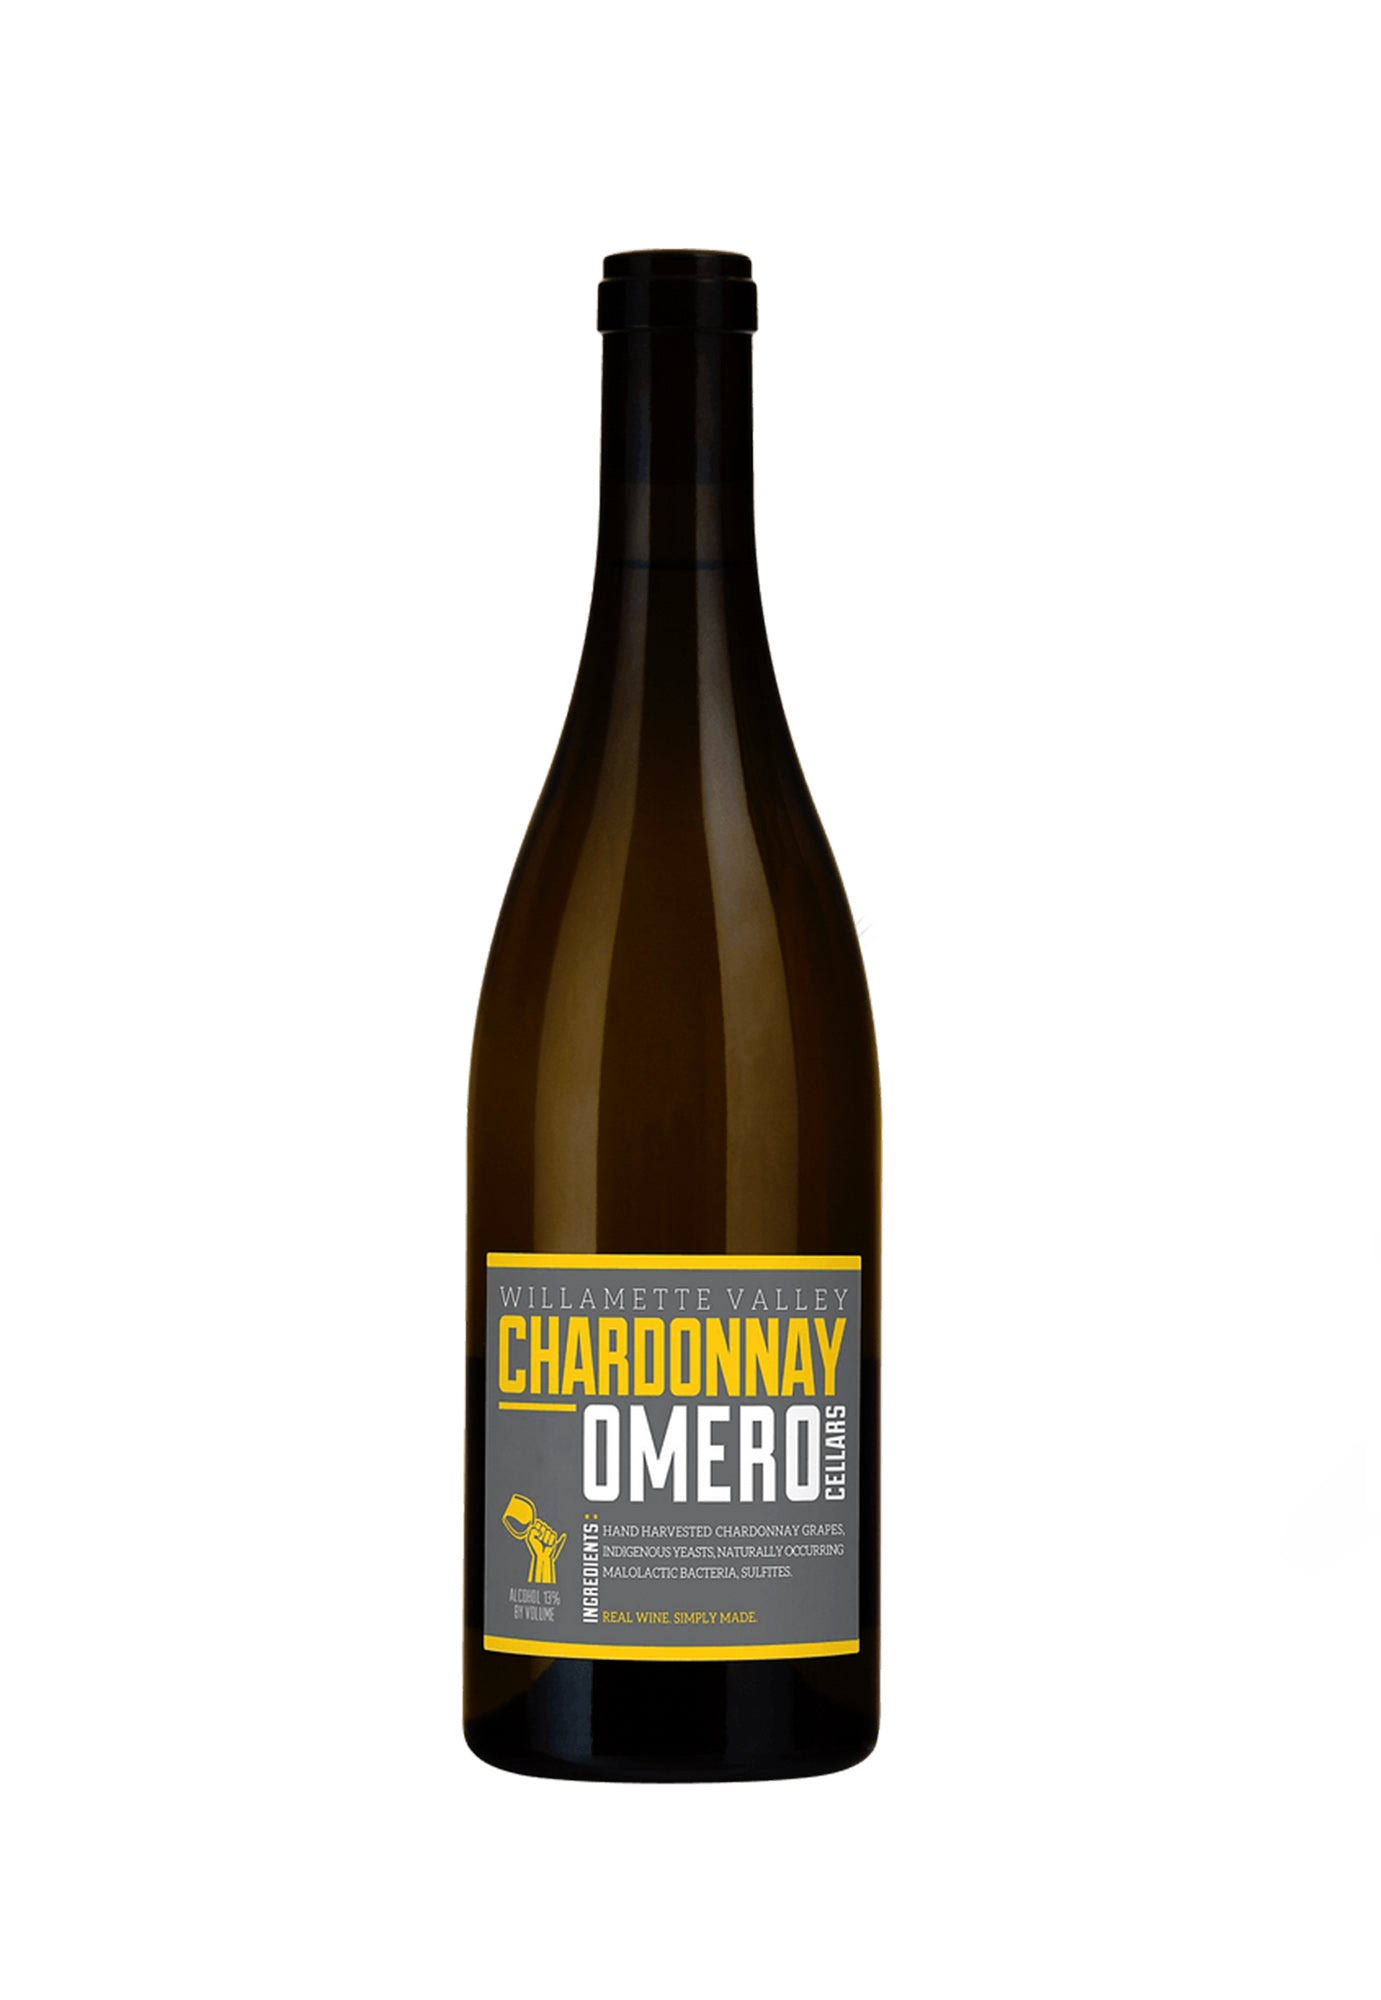 Omero Chardonnay 2017